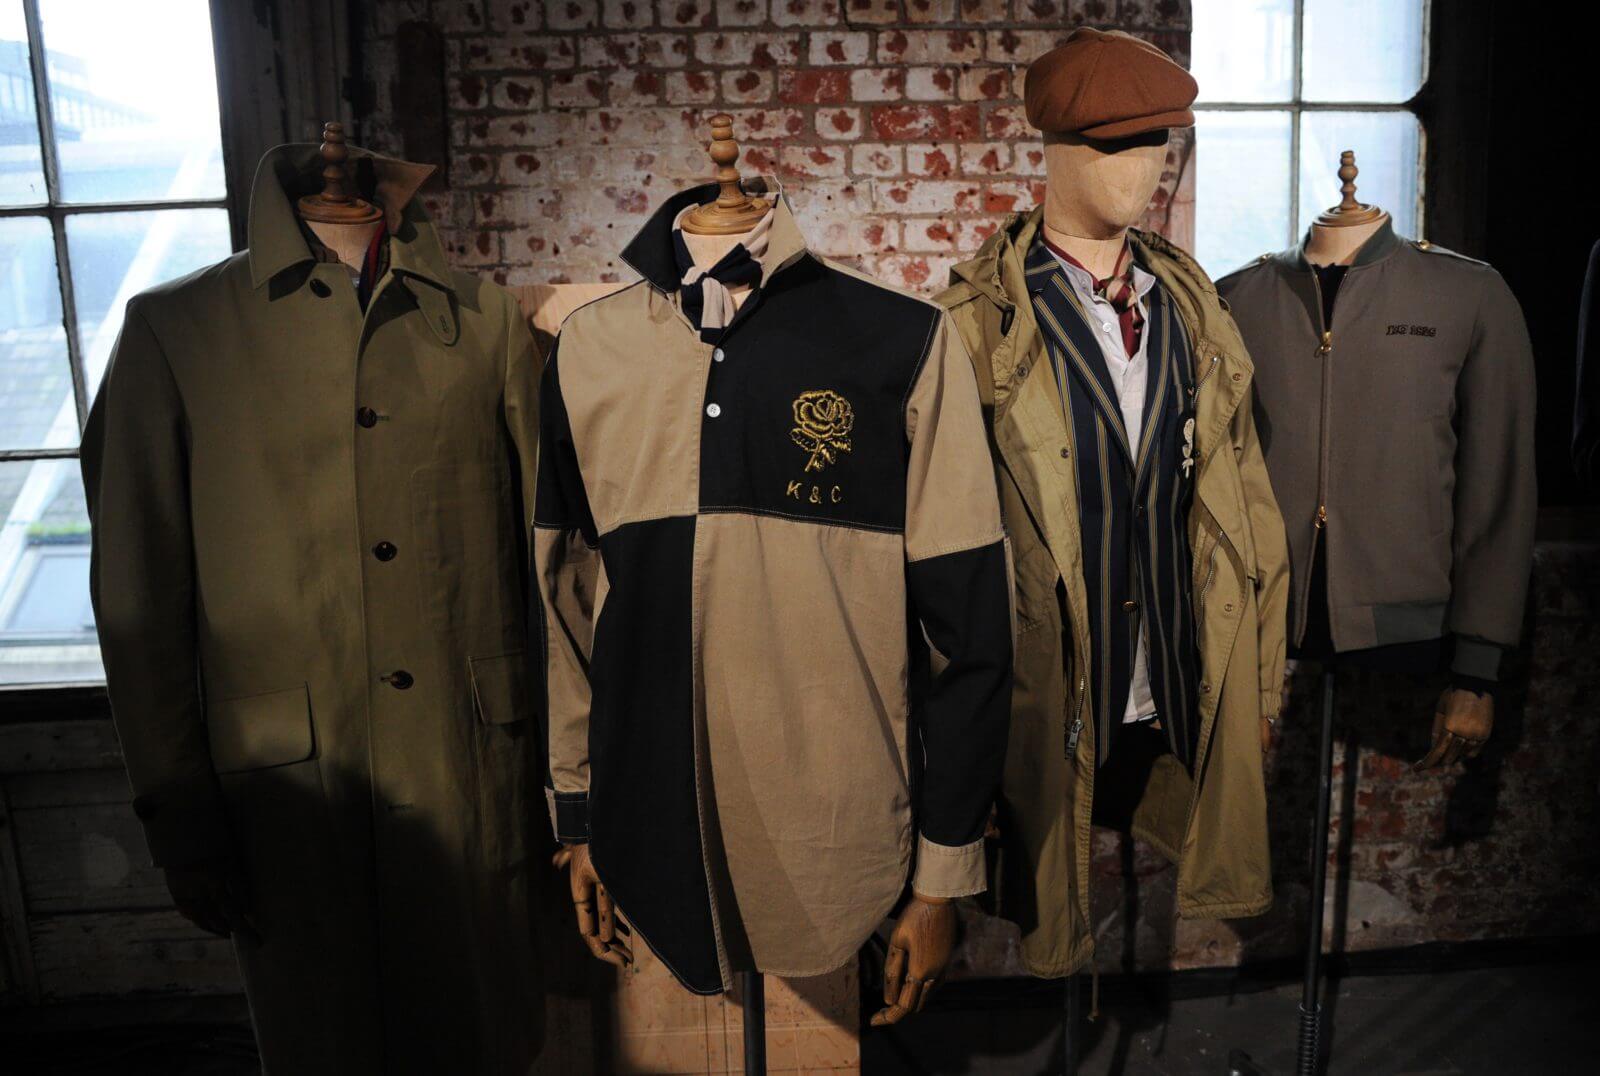 Kent & Curwen, marca de roupas de David Beckham, lança linha inspirada na série "Peaky Blinders"